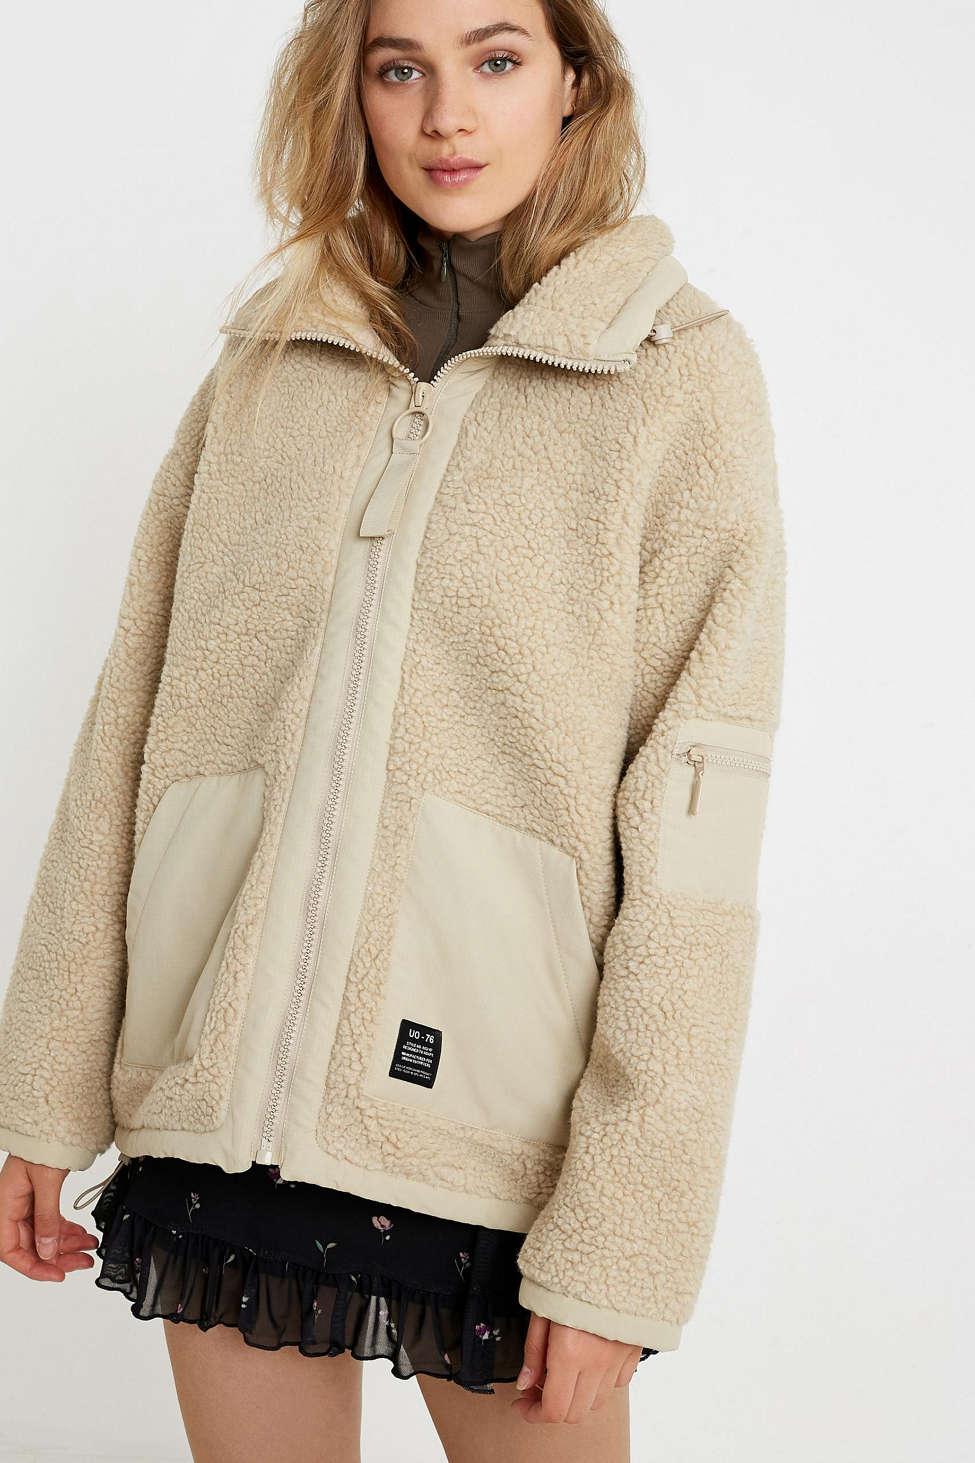 Urban Outfitters Uo Wallace Oversized Fleece Jacket - Lyst